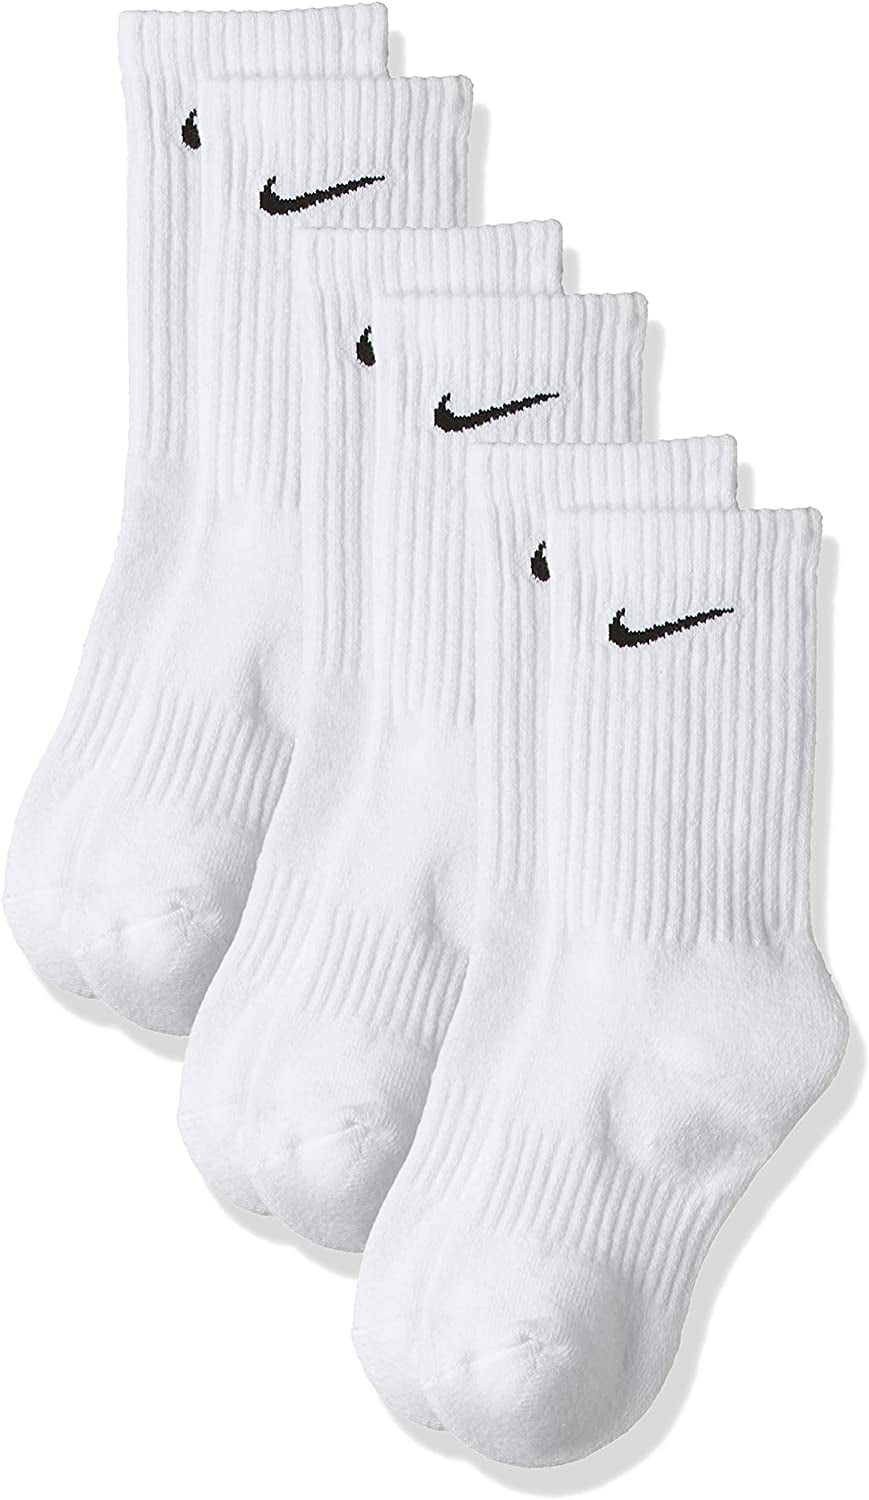 Nike Everyday Cushion Crew Training Socks, Unisex Nike Socks Sweat-Wicking and Impact Cushioning Pair), White/Black, Medium - Walmart.com